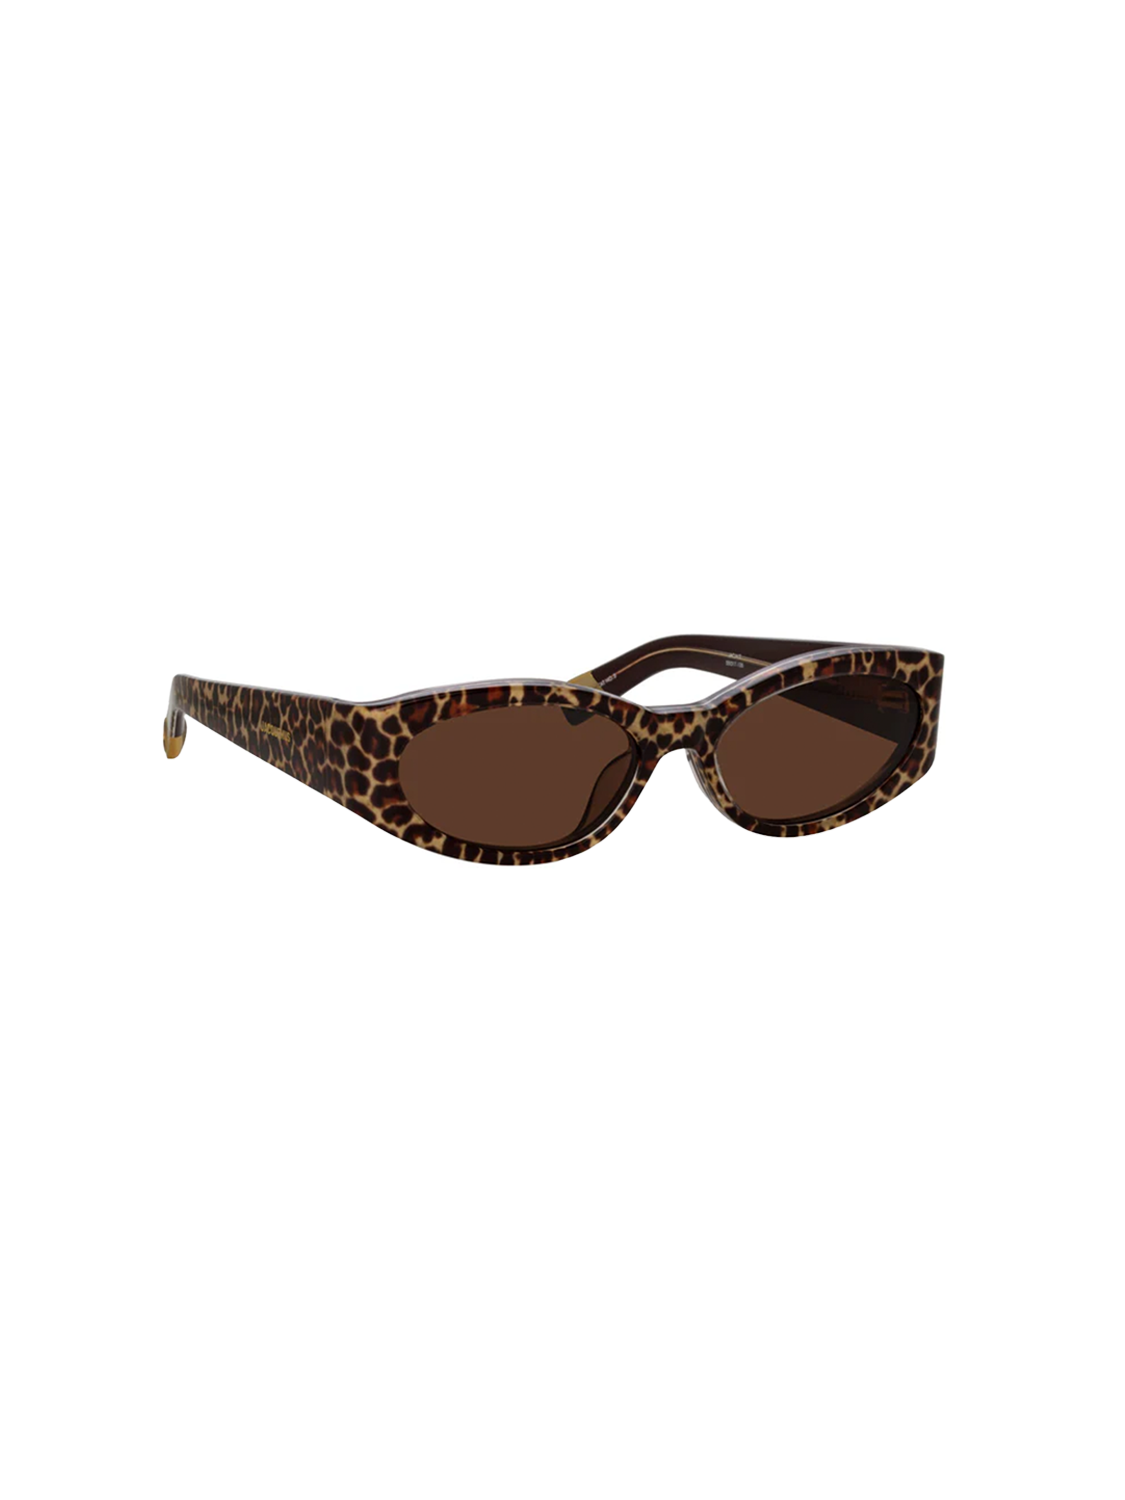 Ovalo - Ovale Sonnenbrille mit Leopardenprint 